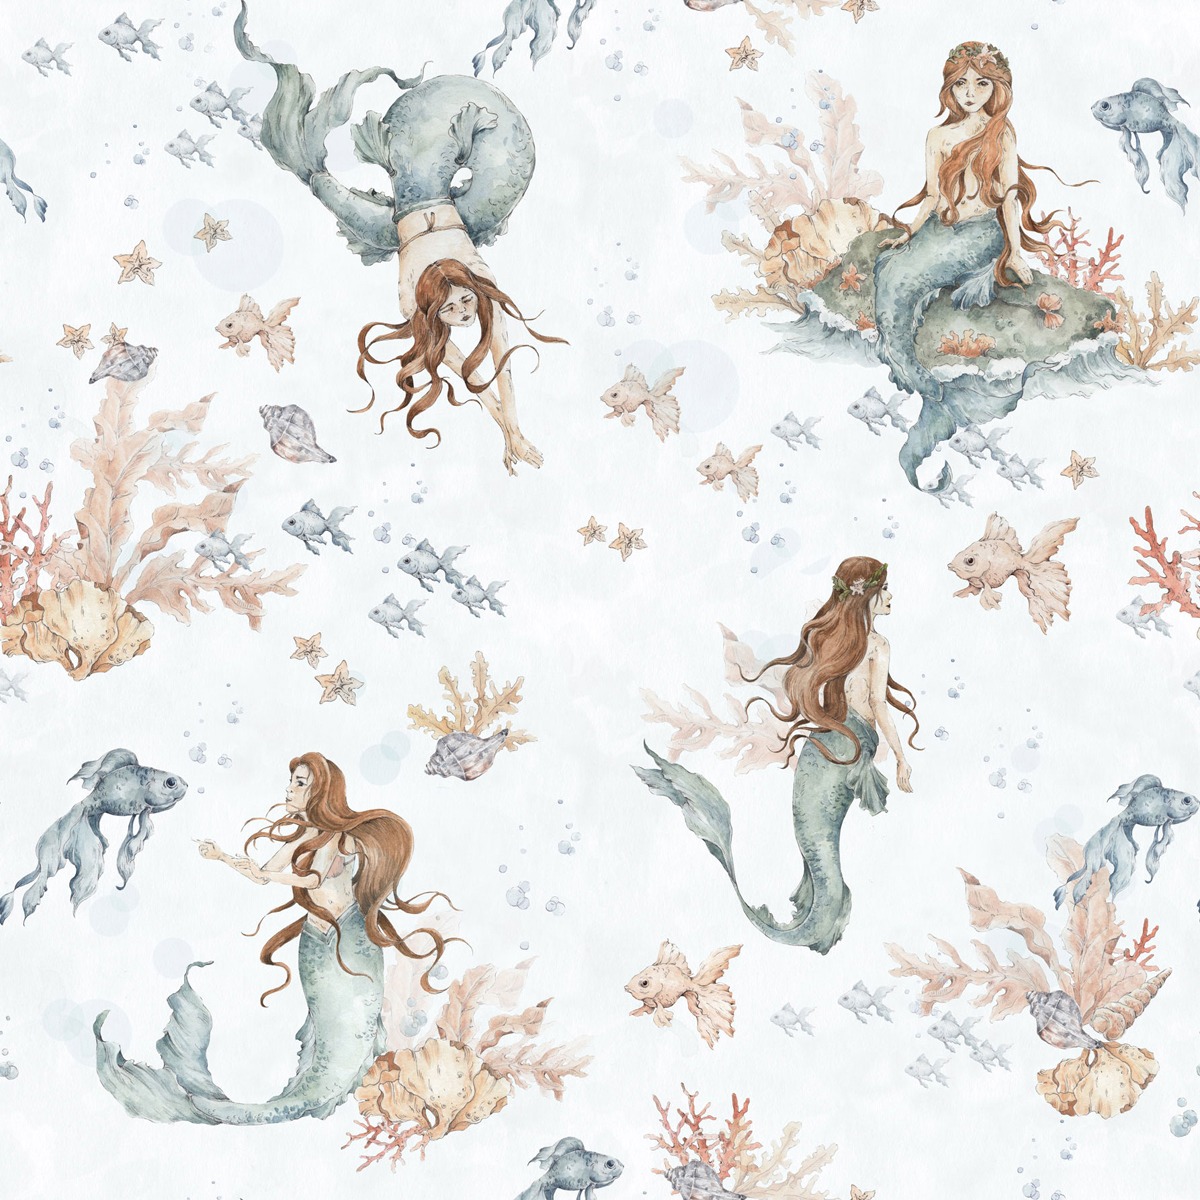 Mermaids In Waves Light Wallpaper.com Wallstickers And Wallpaper Online Store